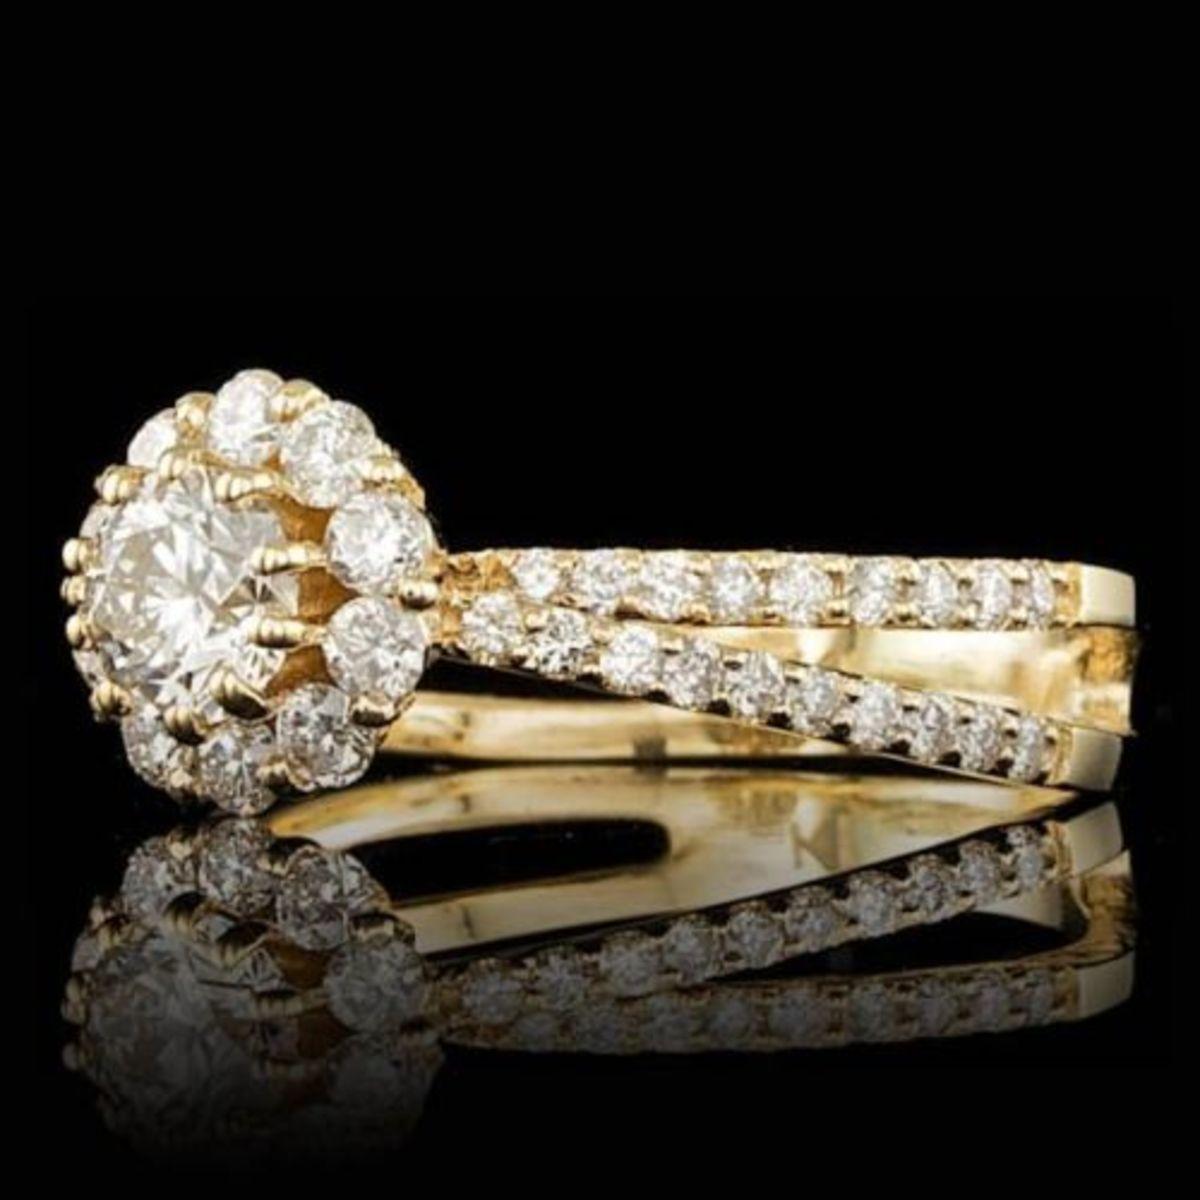 14K Yellow Gold and 0.82tcw Diamond Ring